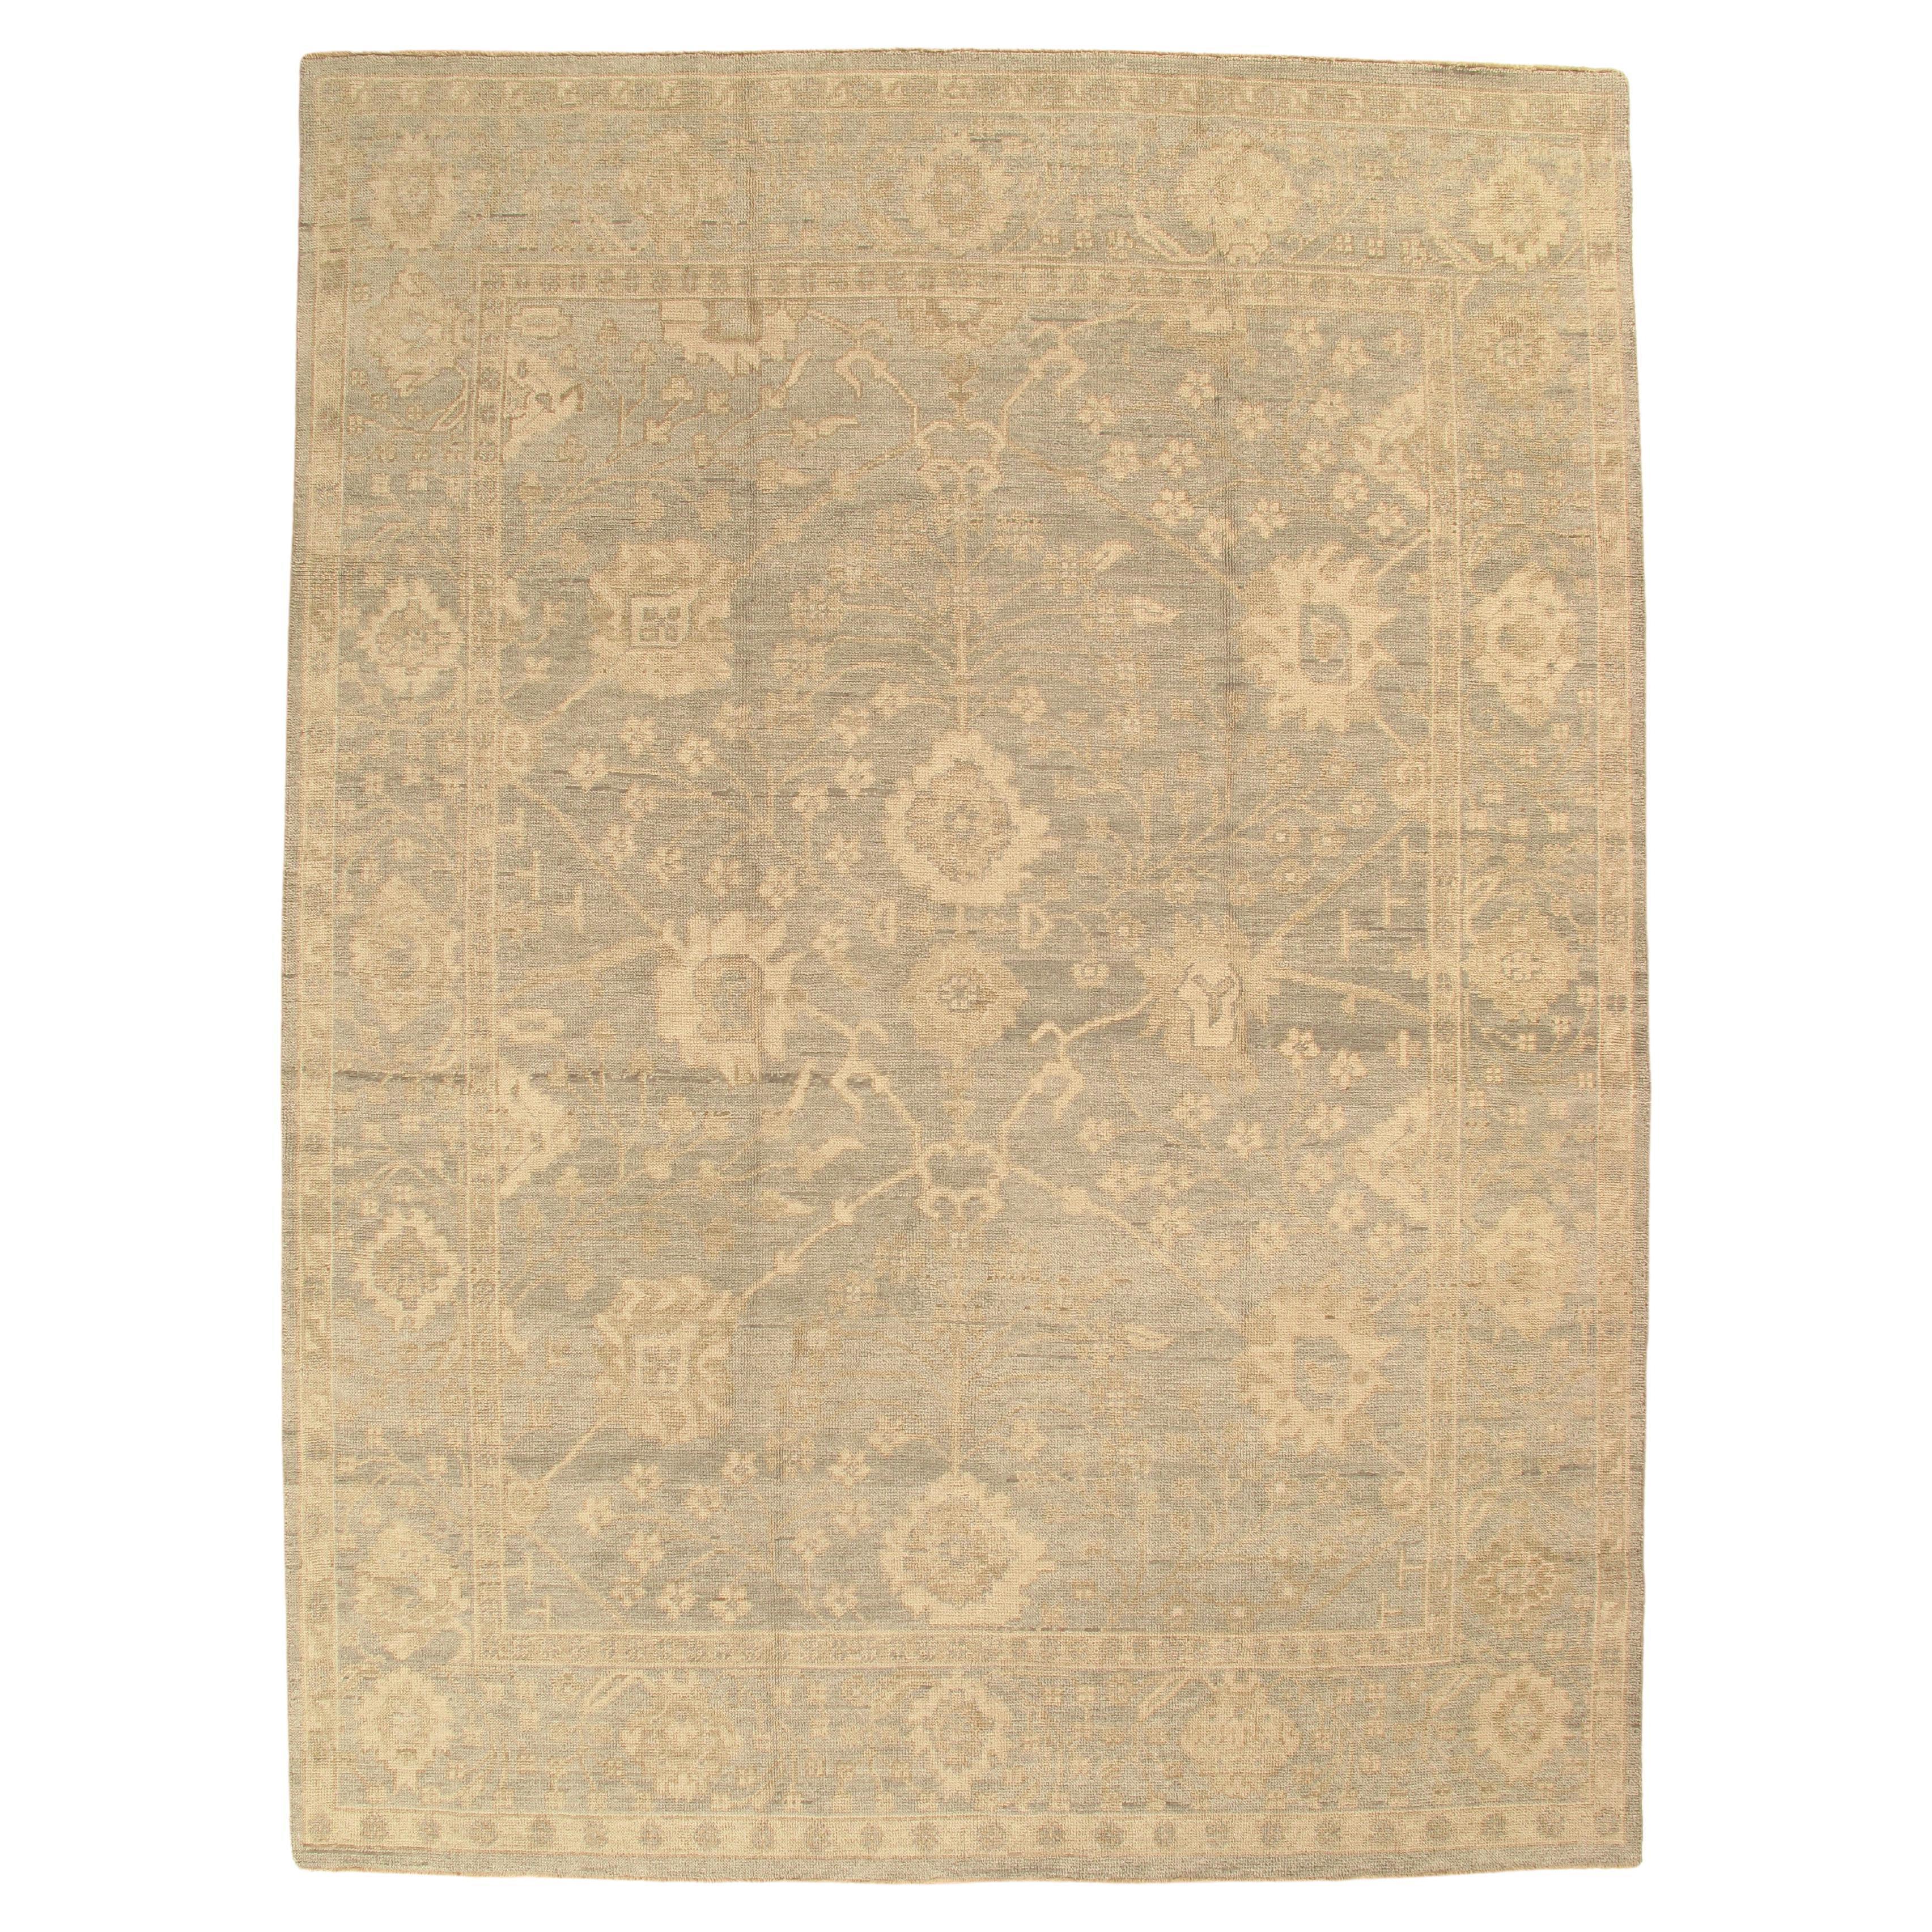 Vintage Oushak Carpet, Oriental Rug, Handmade Green Grey, Ivory, Saffron